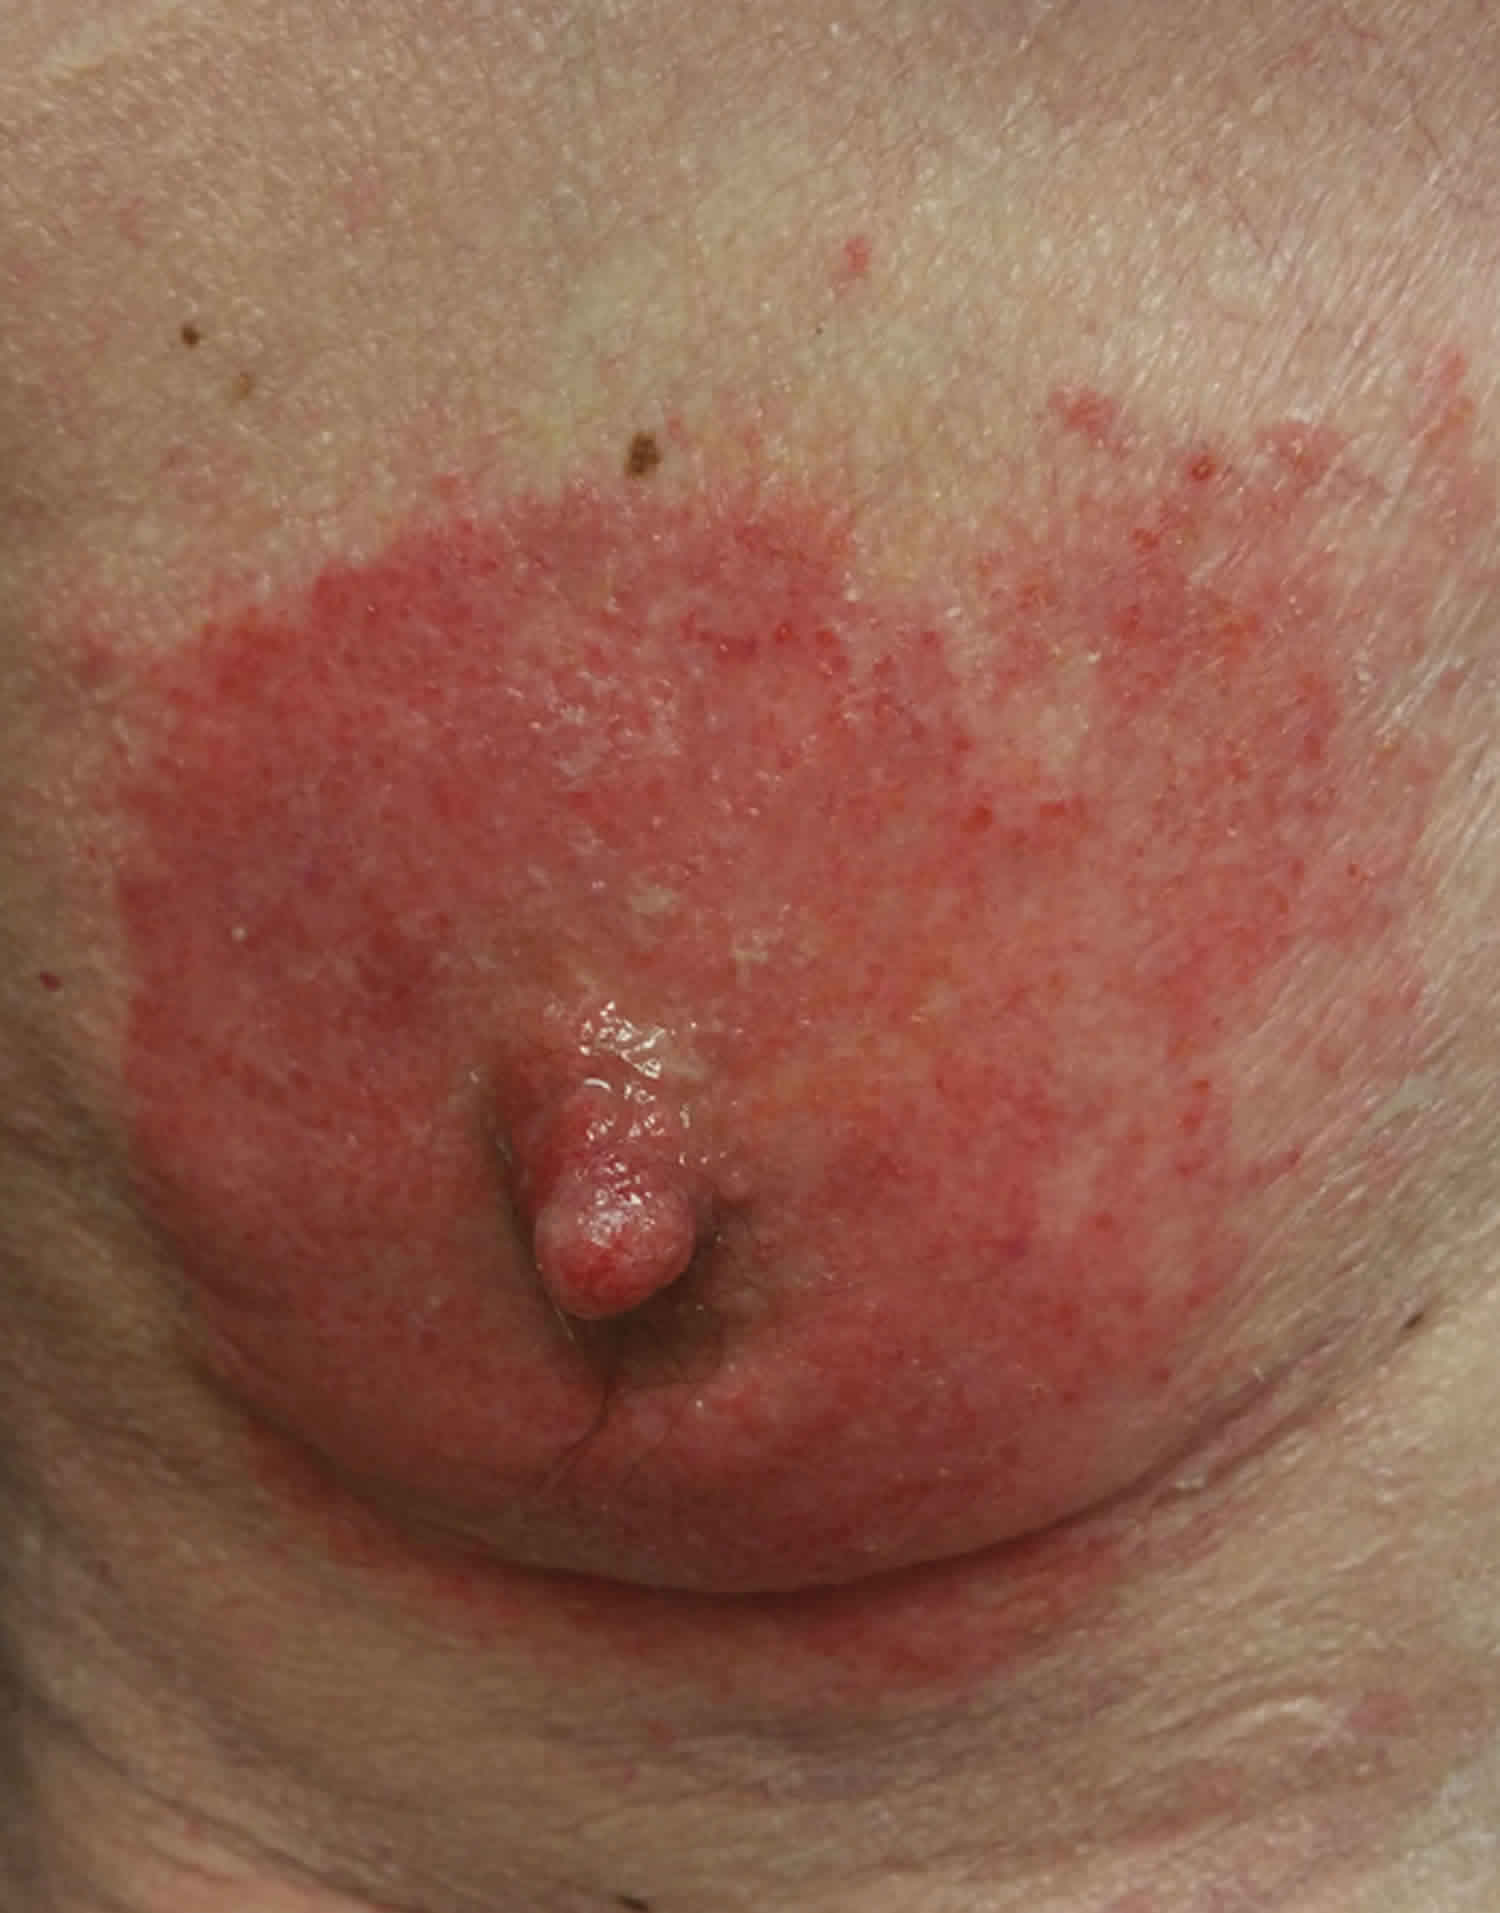 https://healthjade.net/wp-content/uploads/2020/03/breast-eczema.jpg